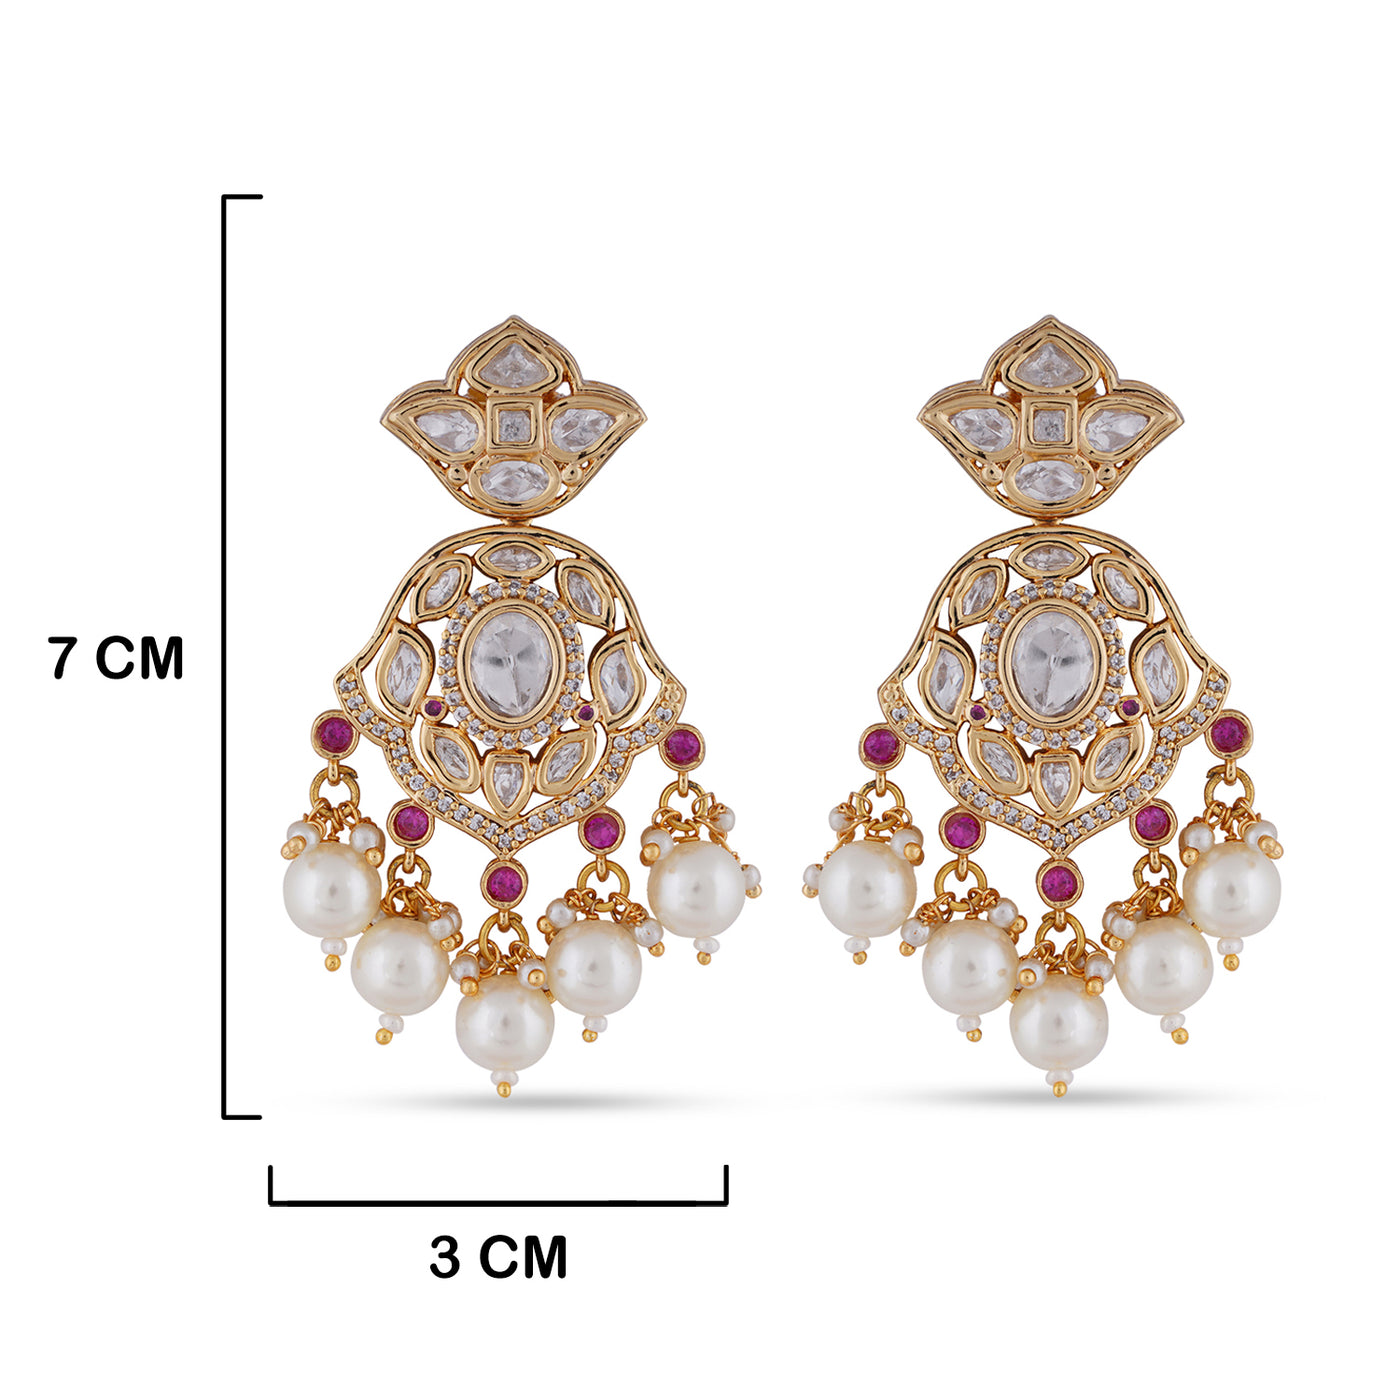 Pearled Kundan Earrings with measurements in cm. 7cm by 3cm.